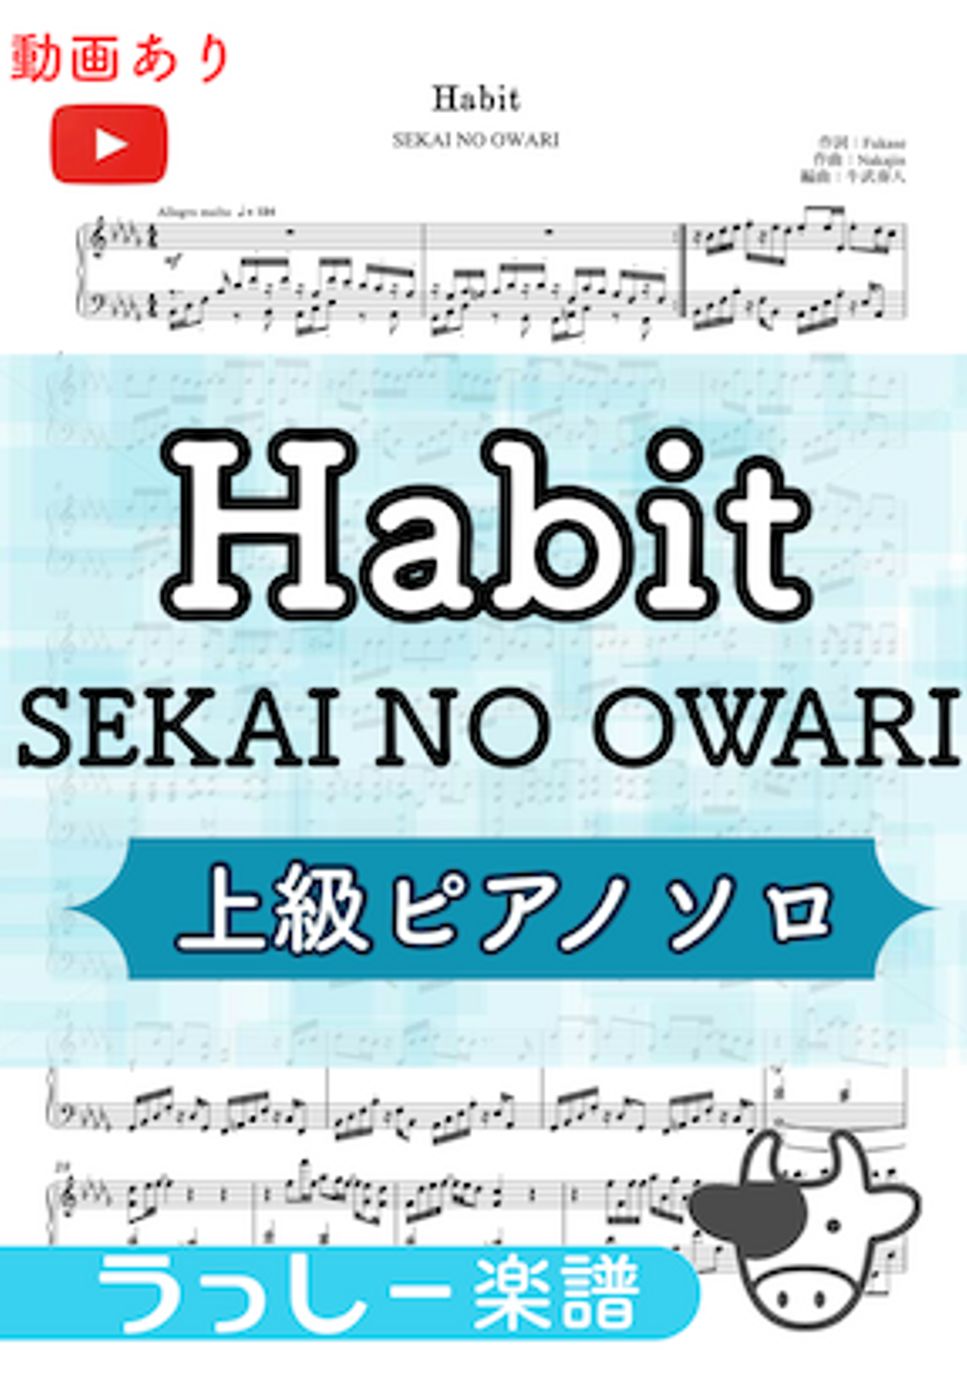 SEKAI NO OWARI - Habit (映画『ホリック xxxHOLiC』主題歌) by 牛武奏人